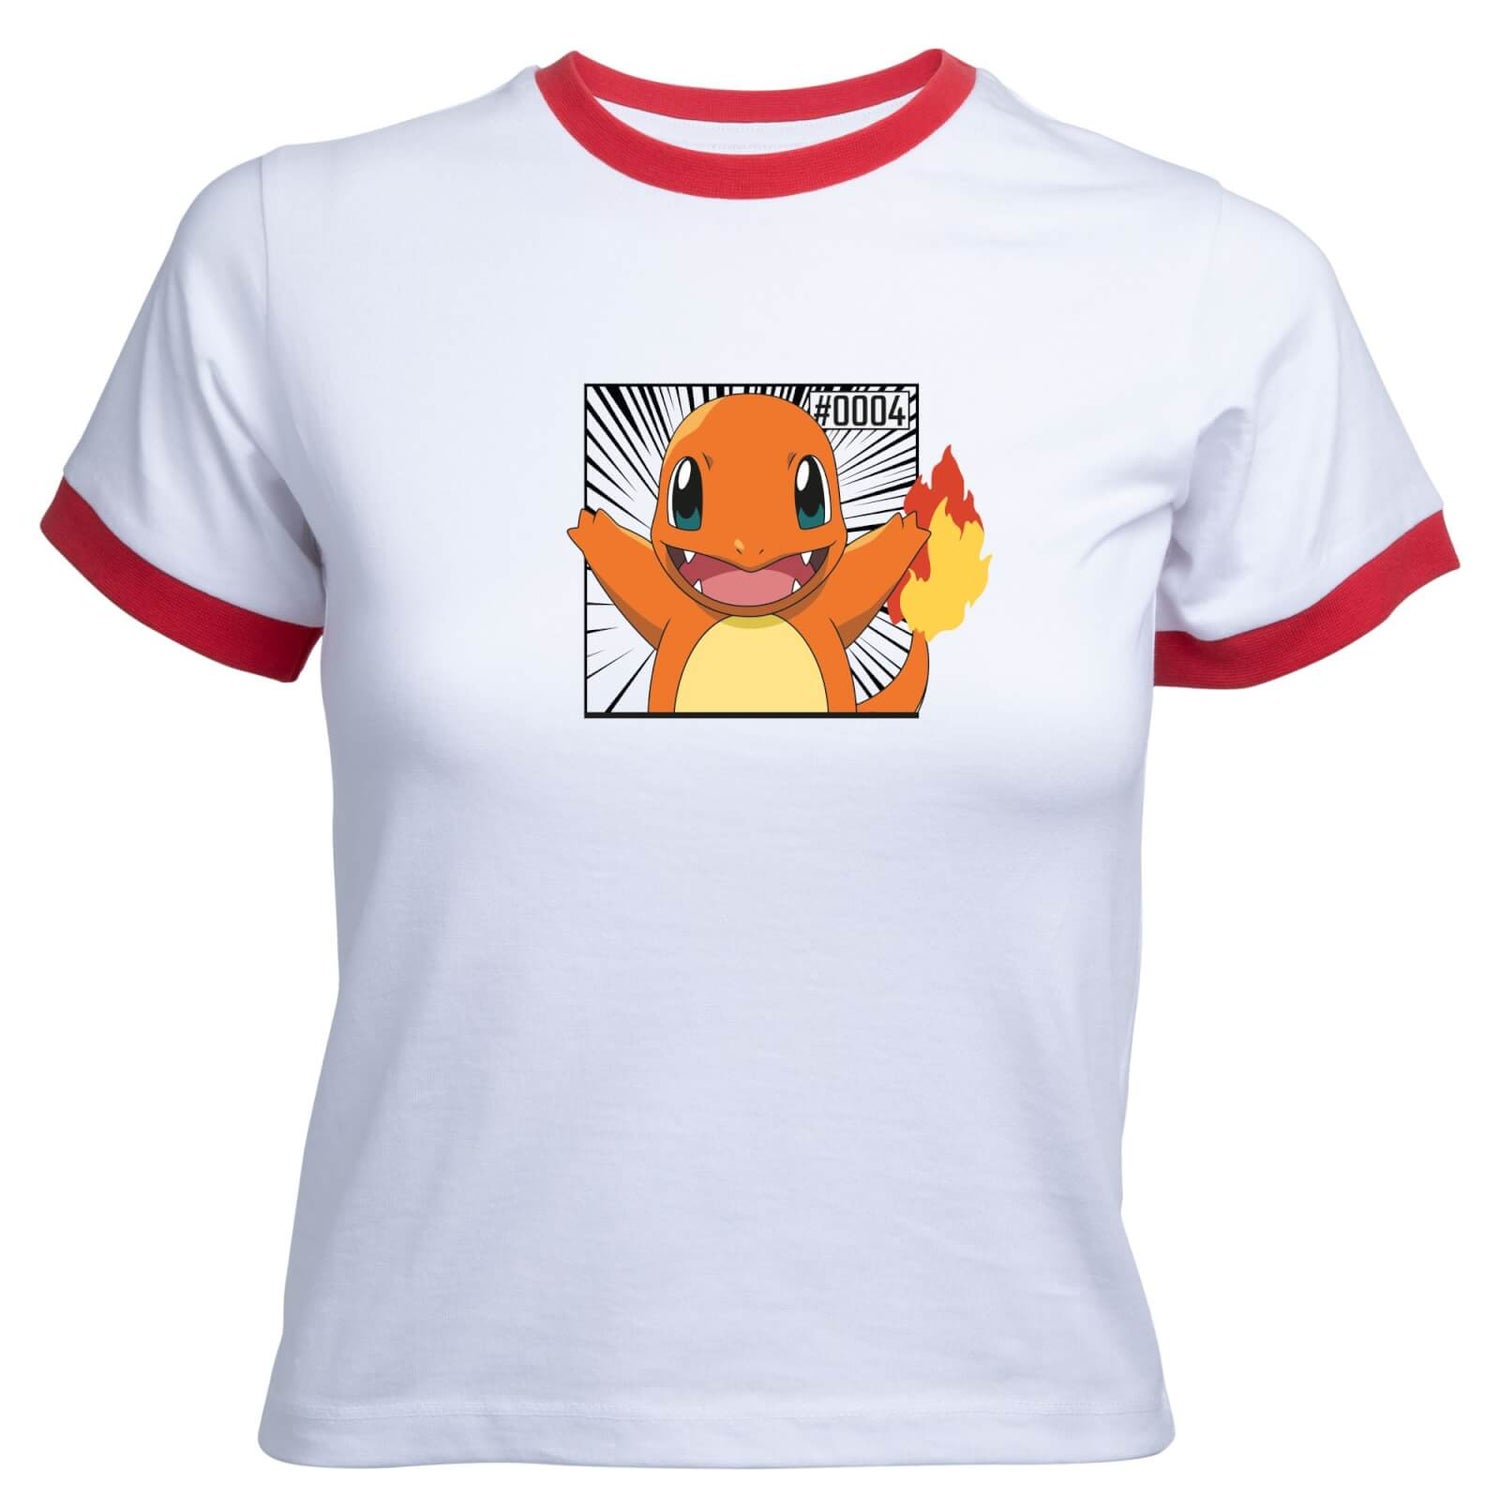 Pokémon Pokédex Charmander #0004 Women's Cropped Ringer T-Shirt - White Red